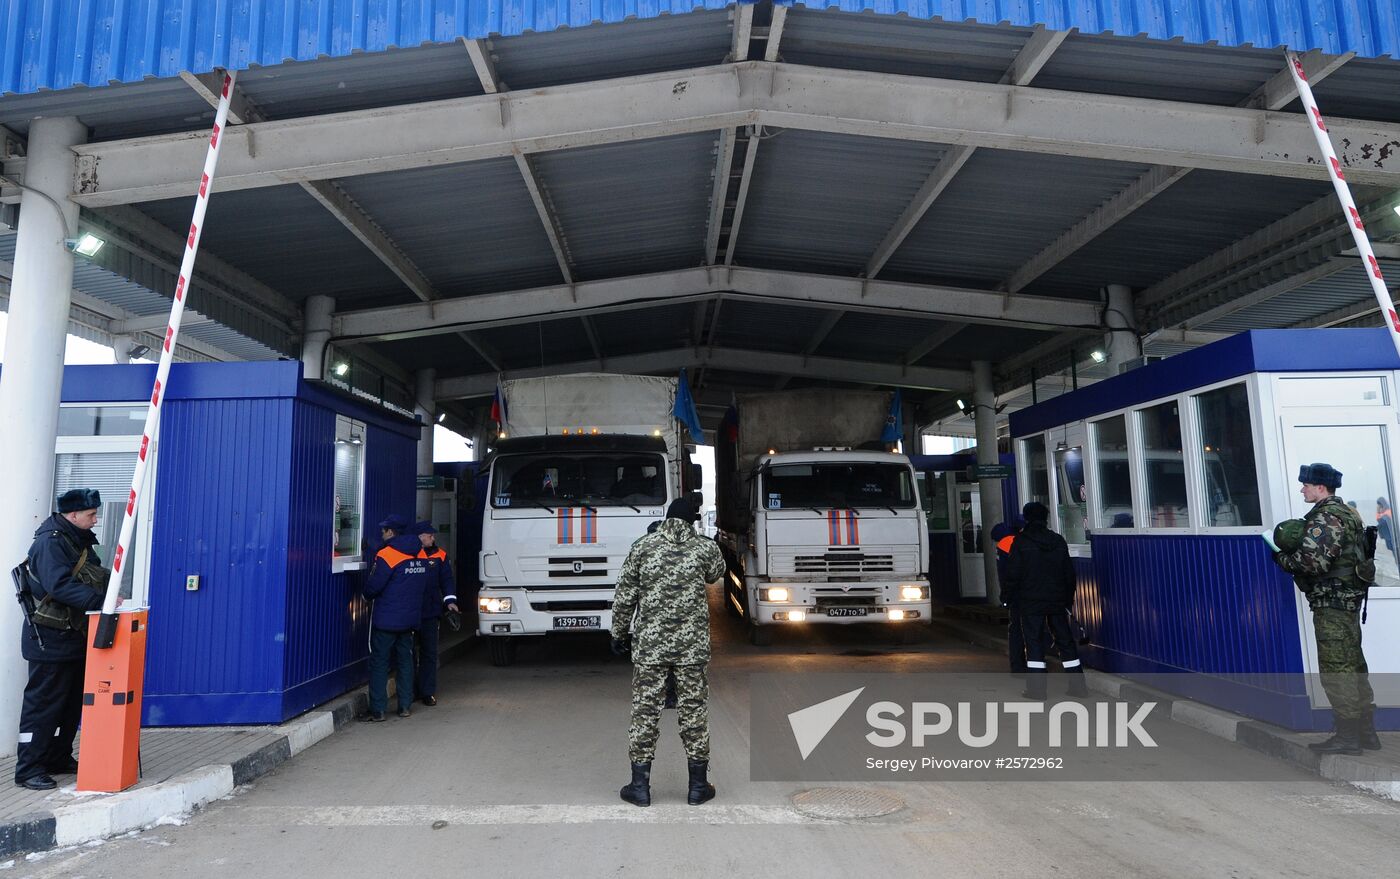 Fourteenth humanitarian aid convoy departs for southeastern Ukraine